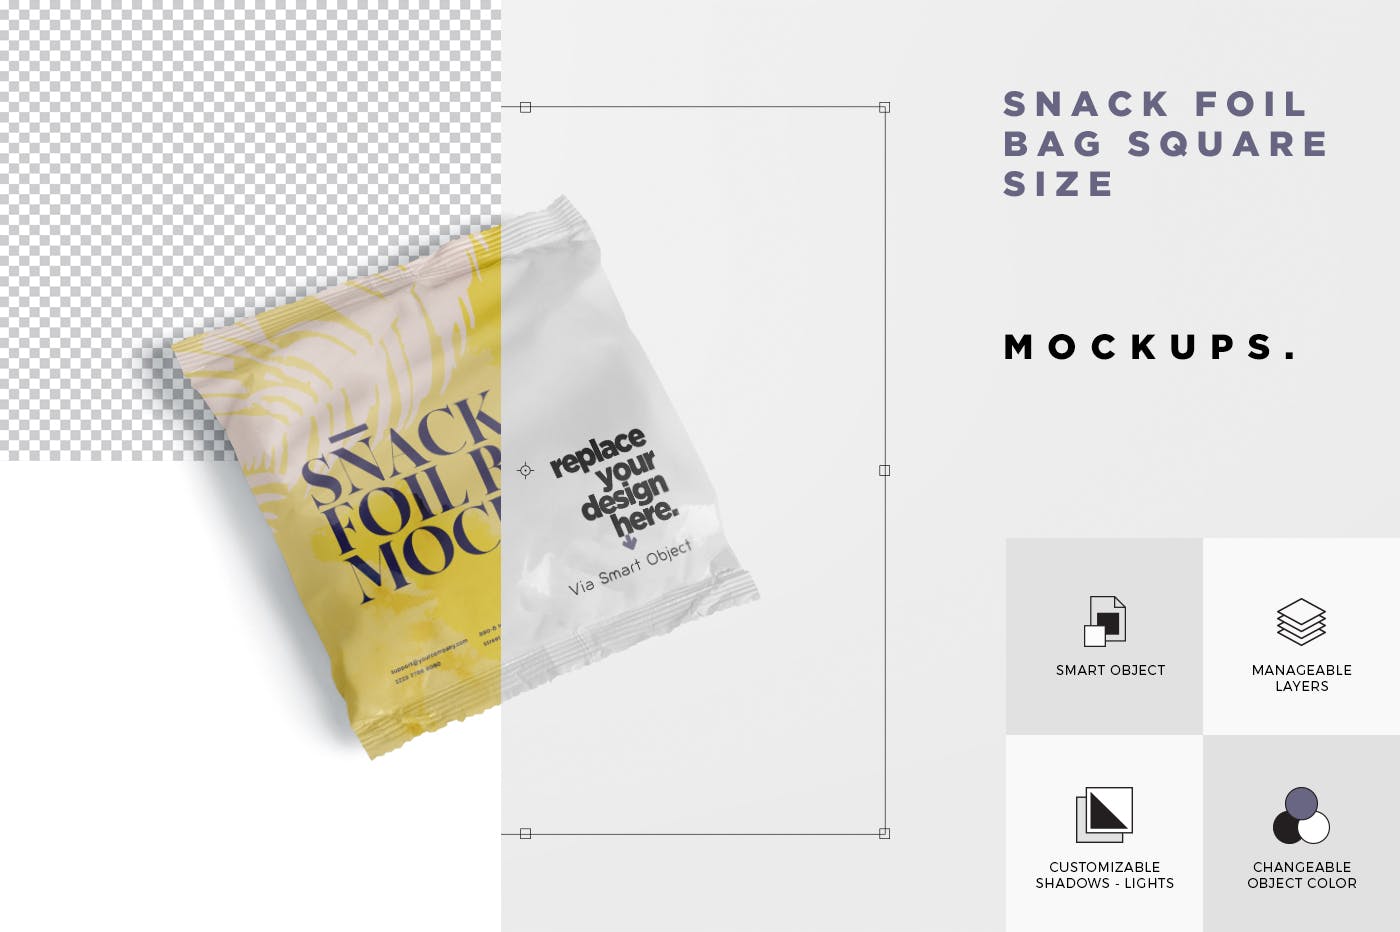 小吃零食铝箔包装袋设计图素材中国精选 Snack Foil Bag Mockup – Square Size – Small插图(6)